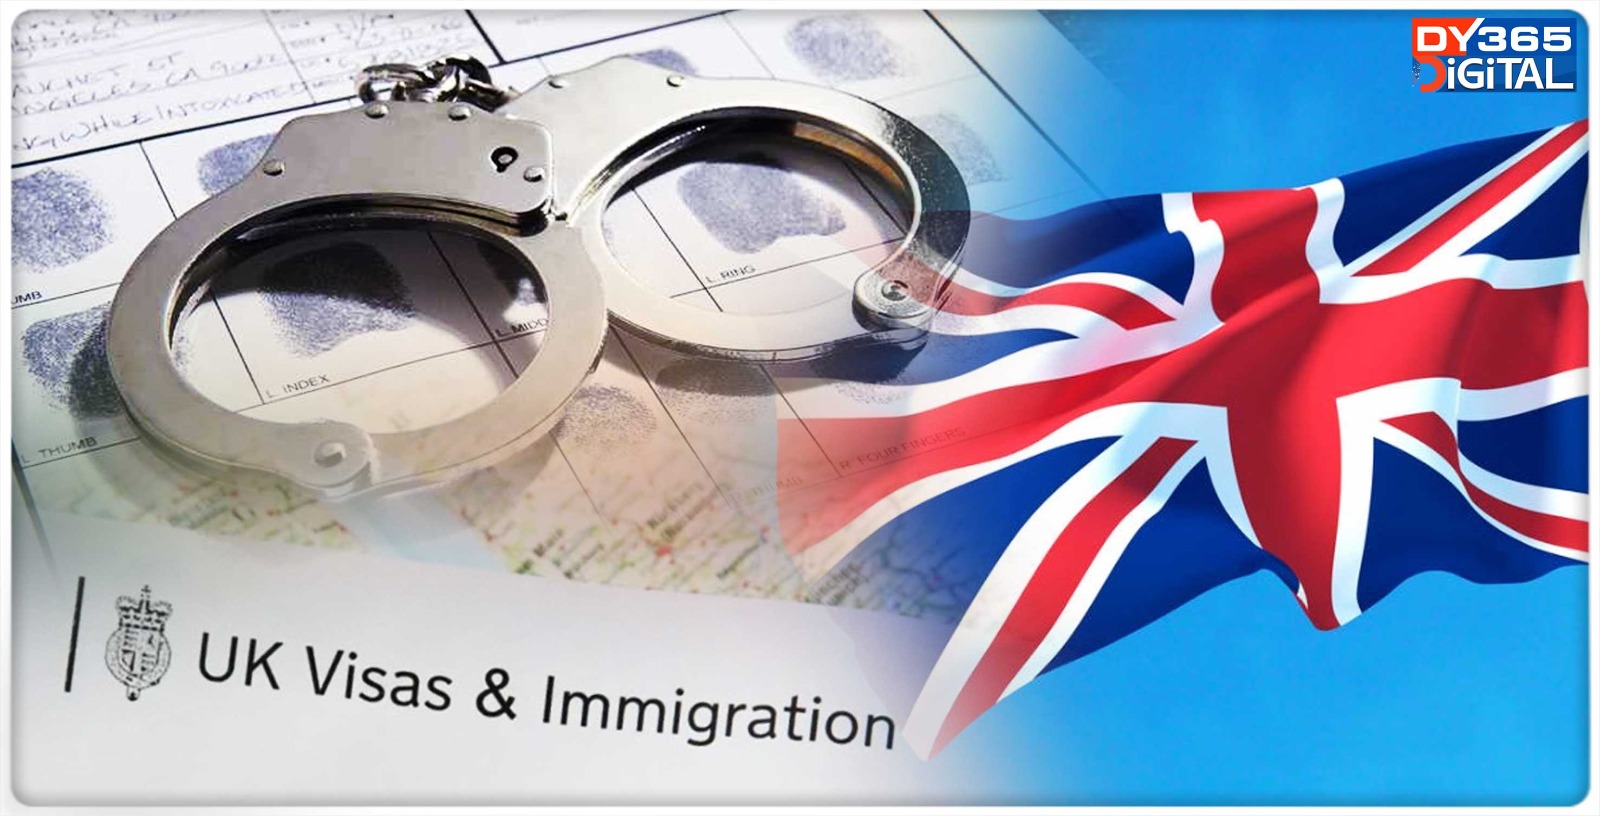 12 Indians Including Woman Arrested In UK Visa Raids on Bedding, Cake Factories